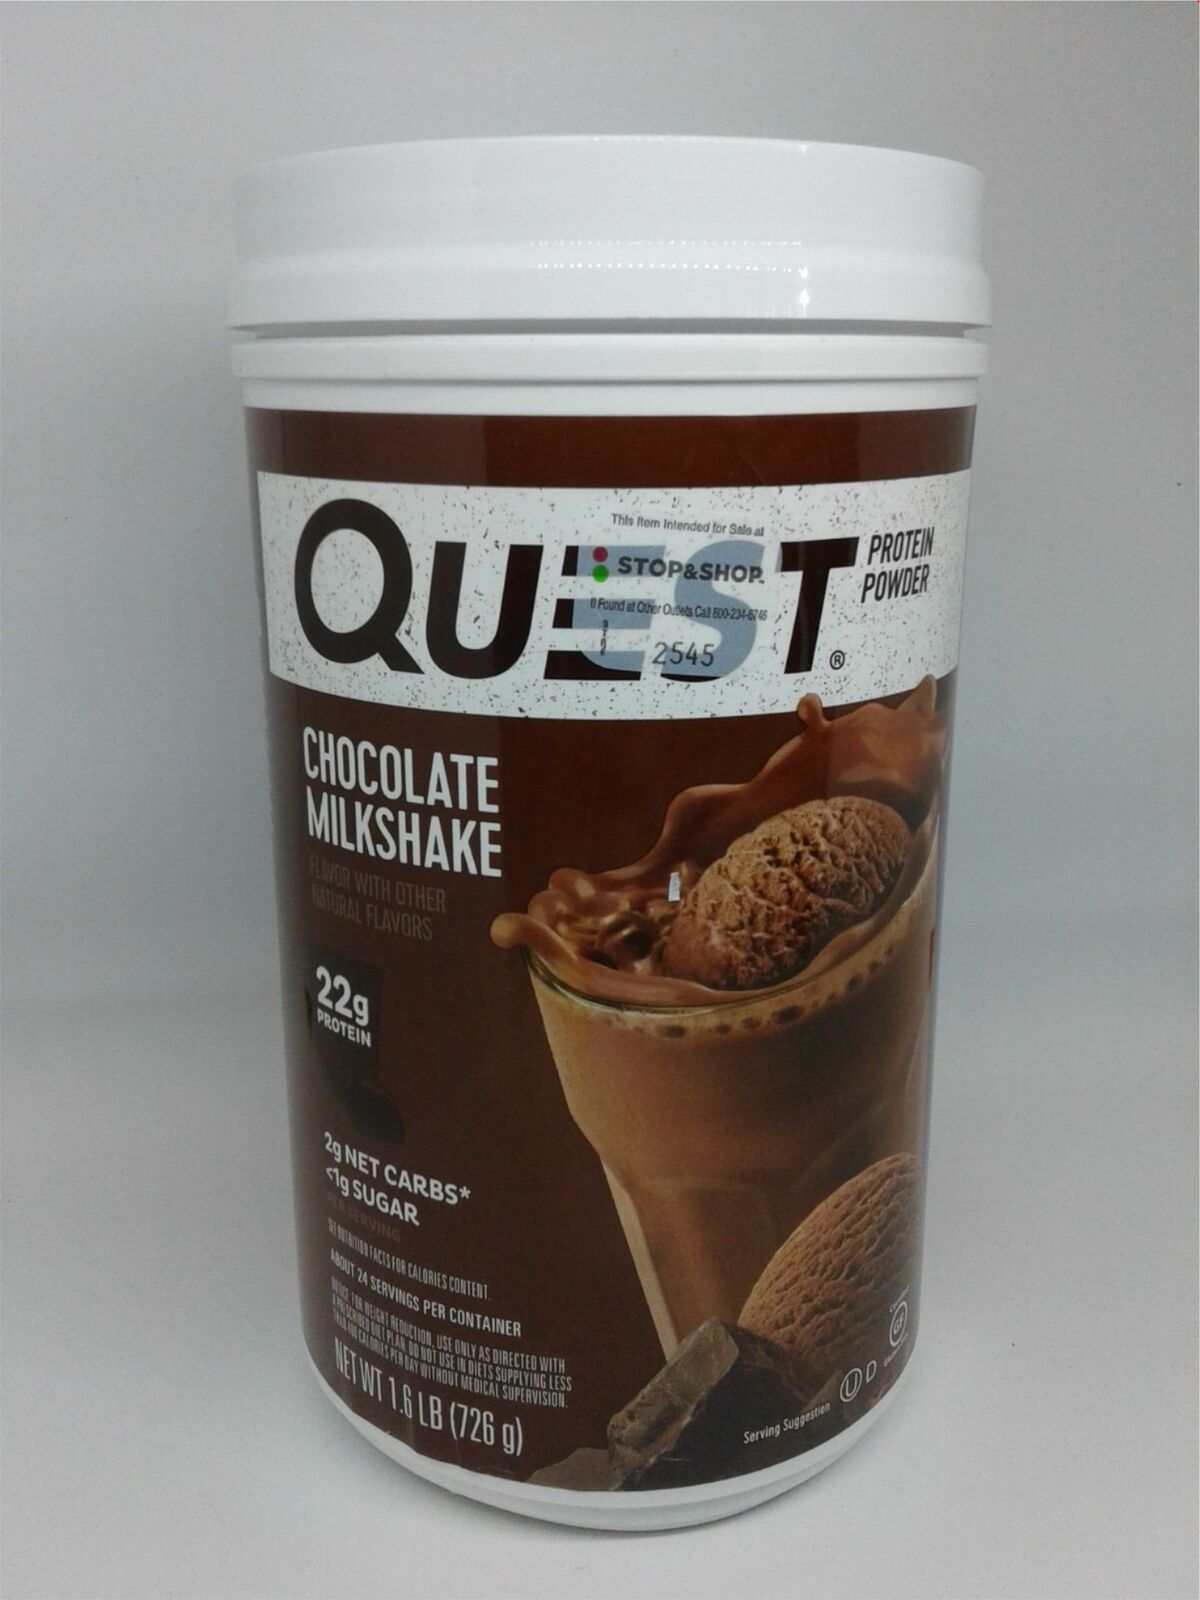 Quest Nutrition Protein Powder Chocolate x 3 -1.6 lb